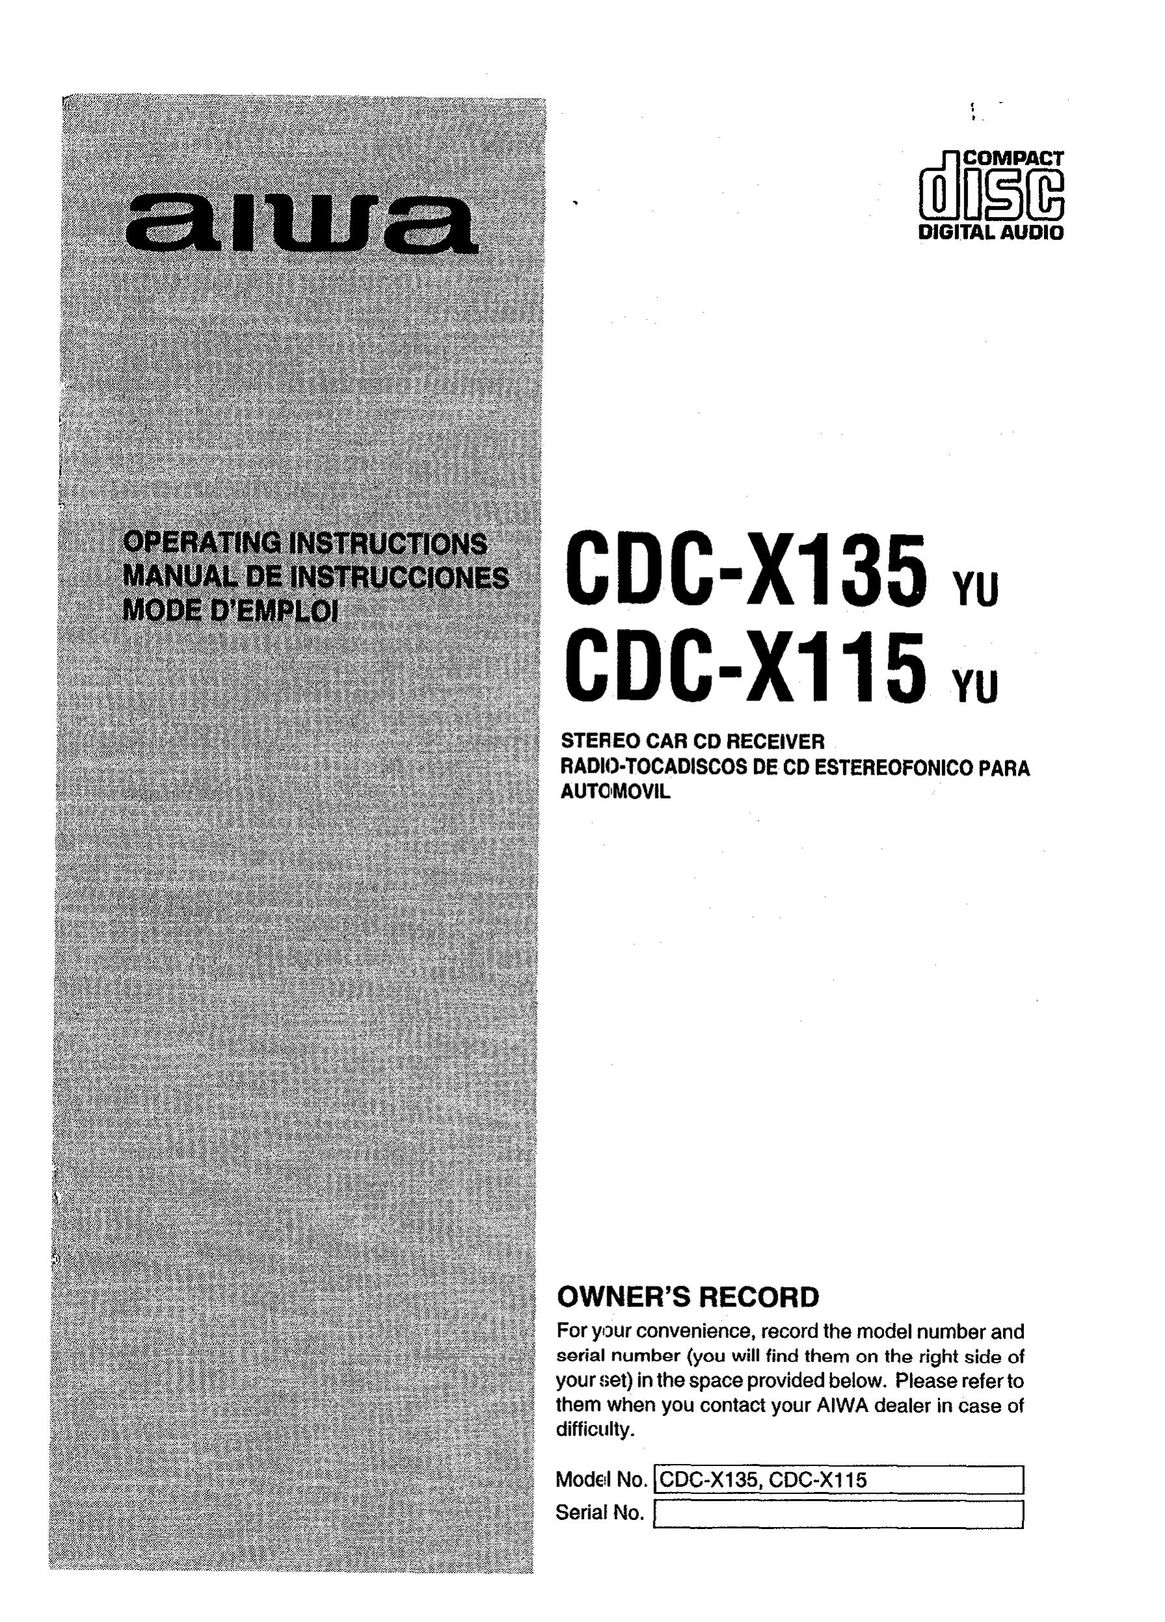 Aiwa CDC-XI15 Car Stereo System User Manual (Page 1)